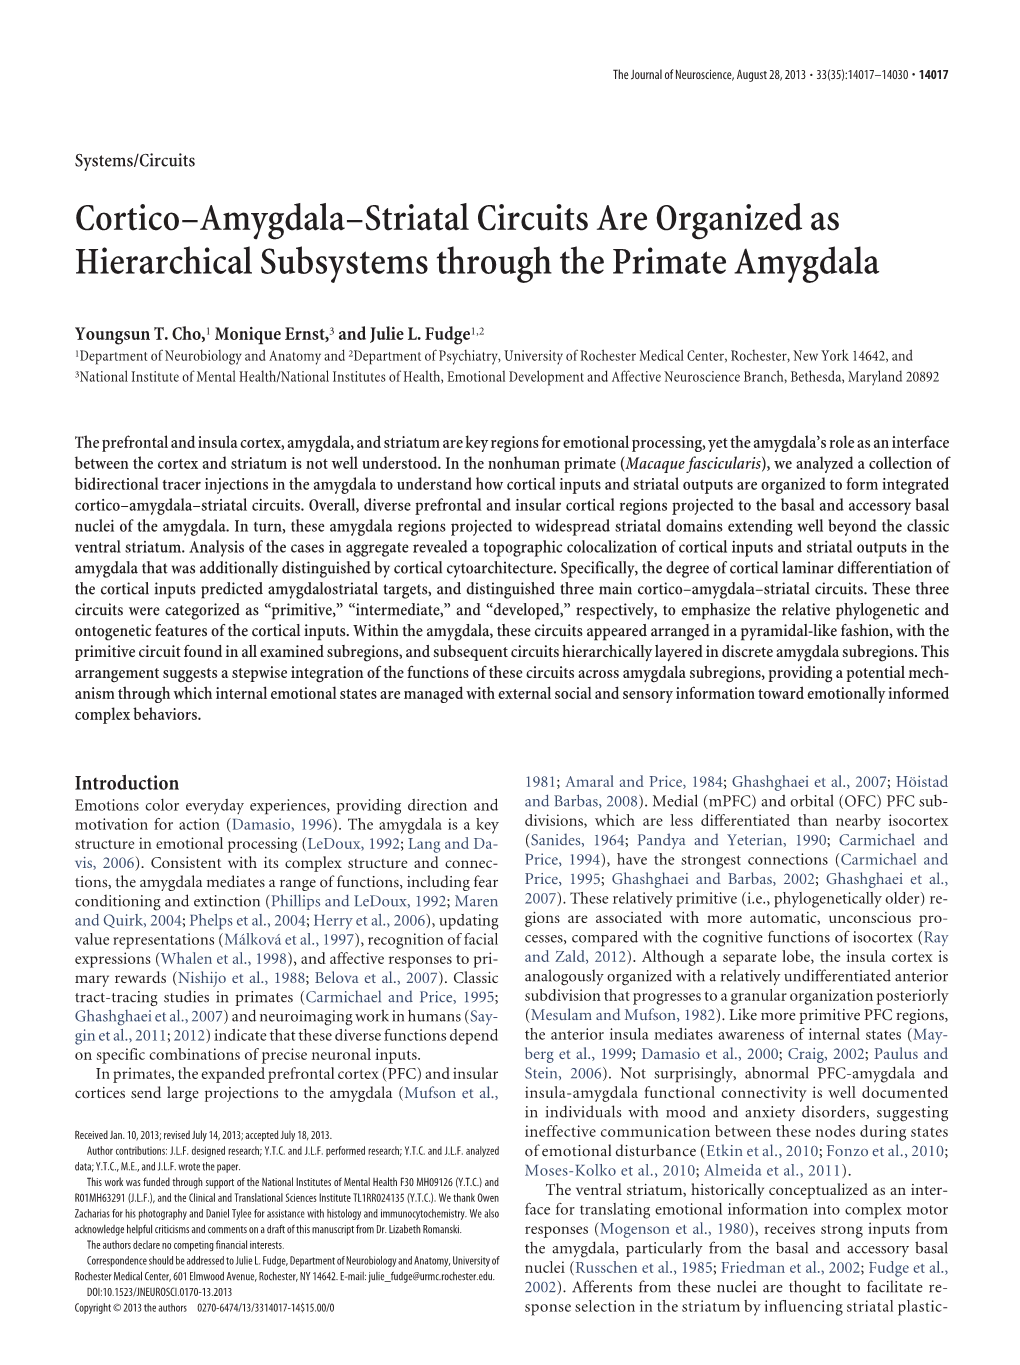 Cortico–Amygdala–Striatal Circuits Are Organized As Hierarchical Subsystems Through the Primate Amygdala